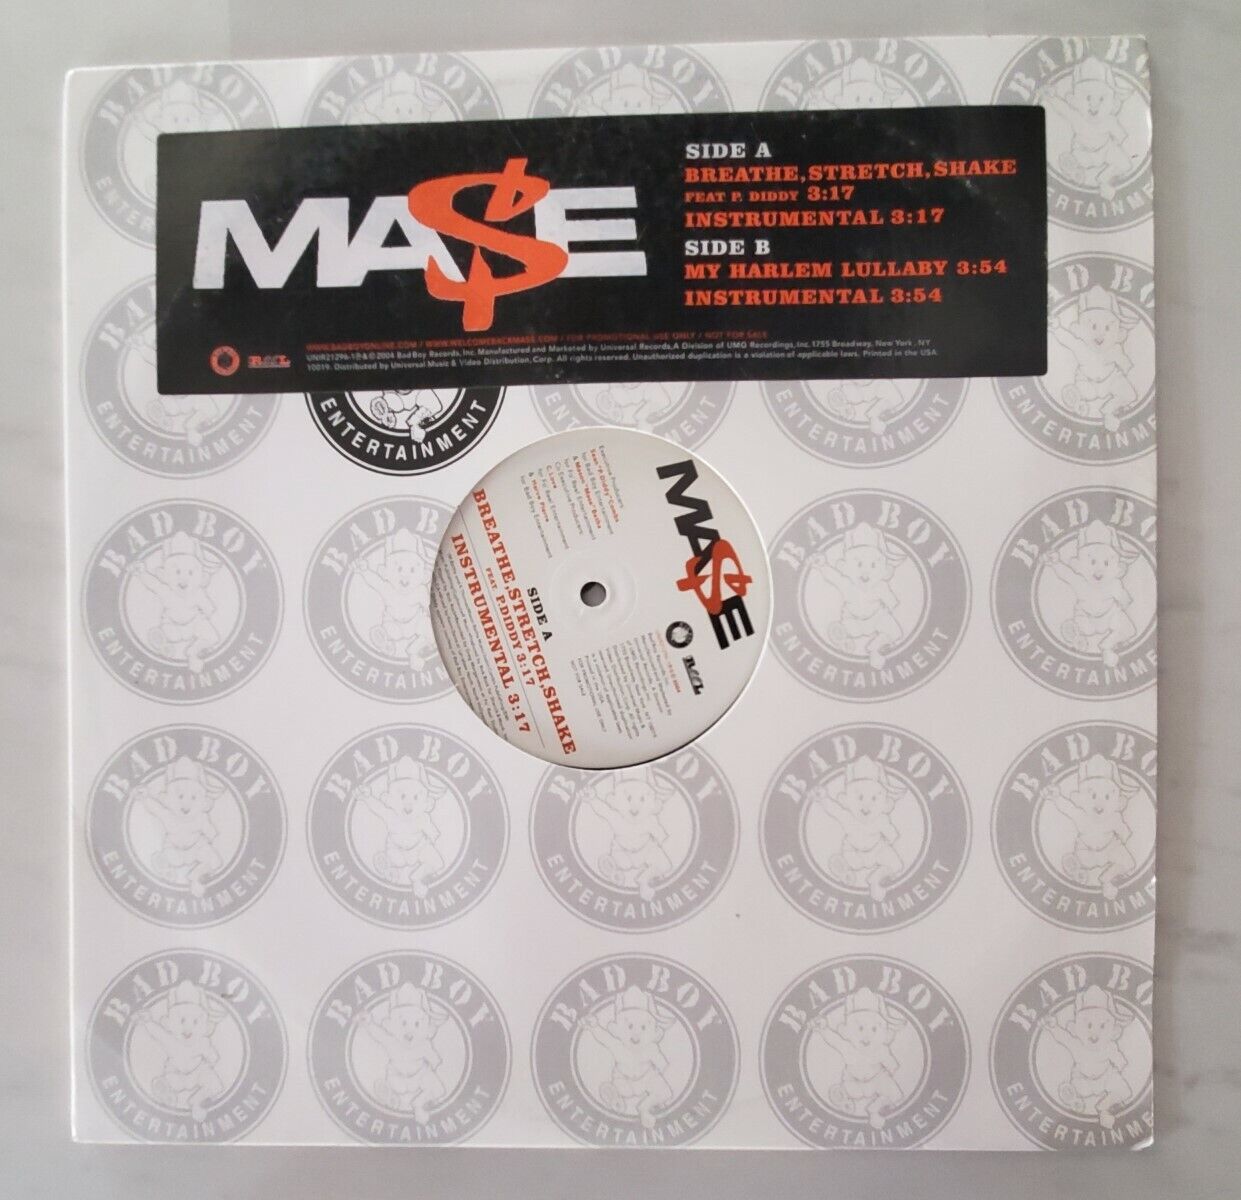 MA$E - MASE - PROMO LP - Breathe Stretch Shake - My Harlem Lullaby -Vinyl Record